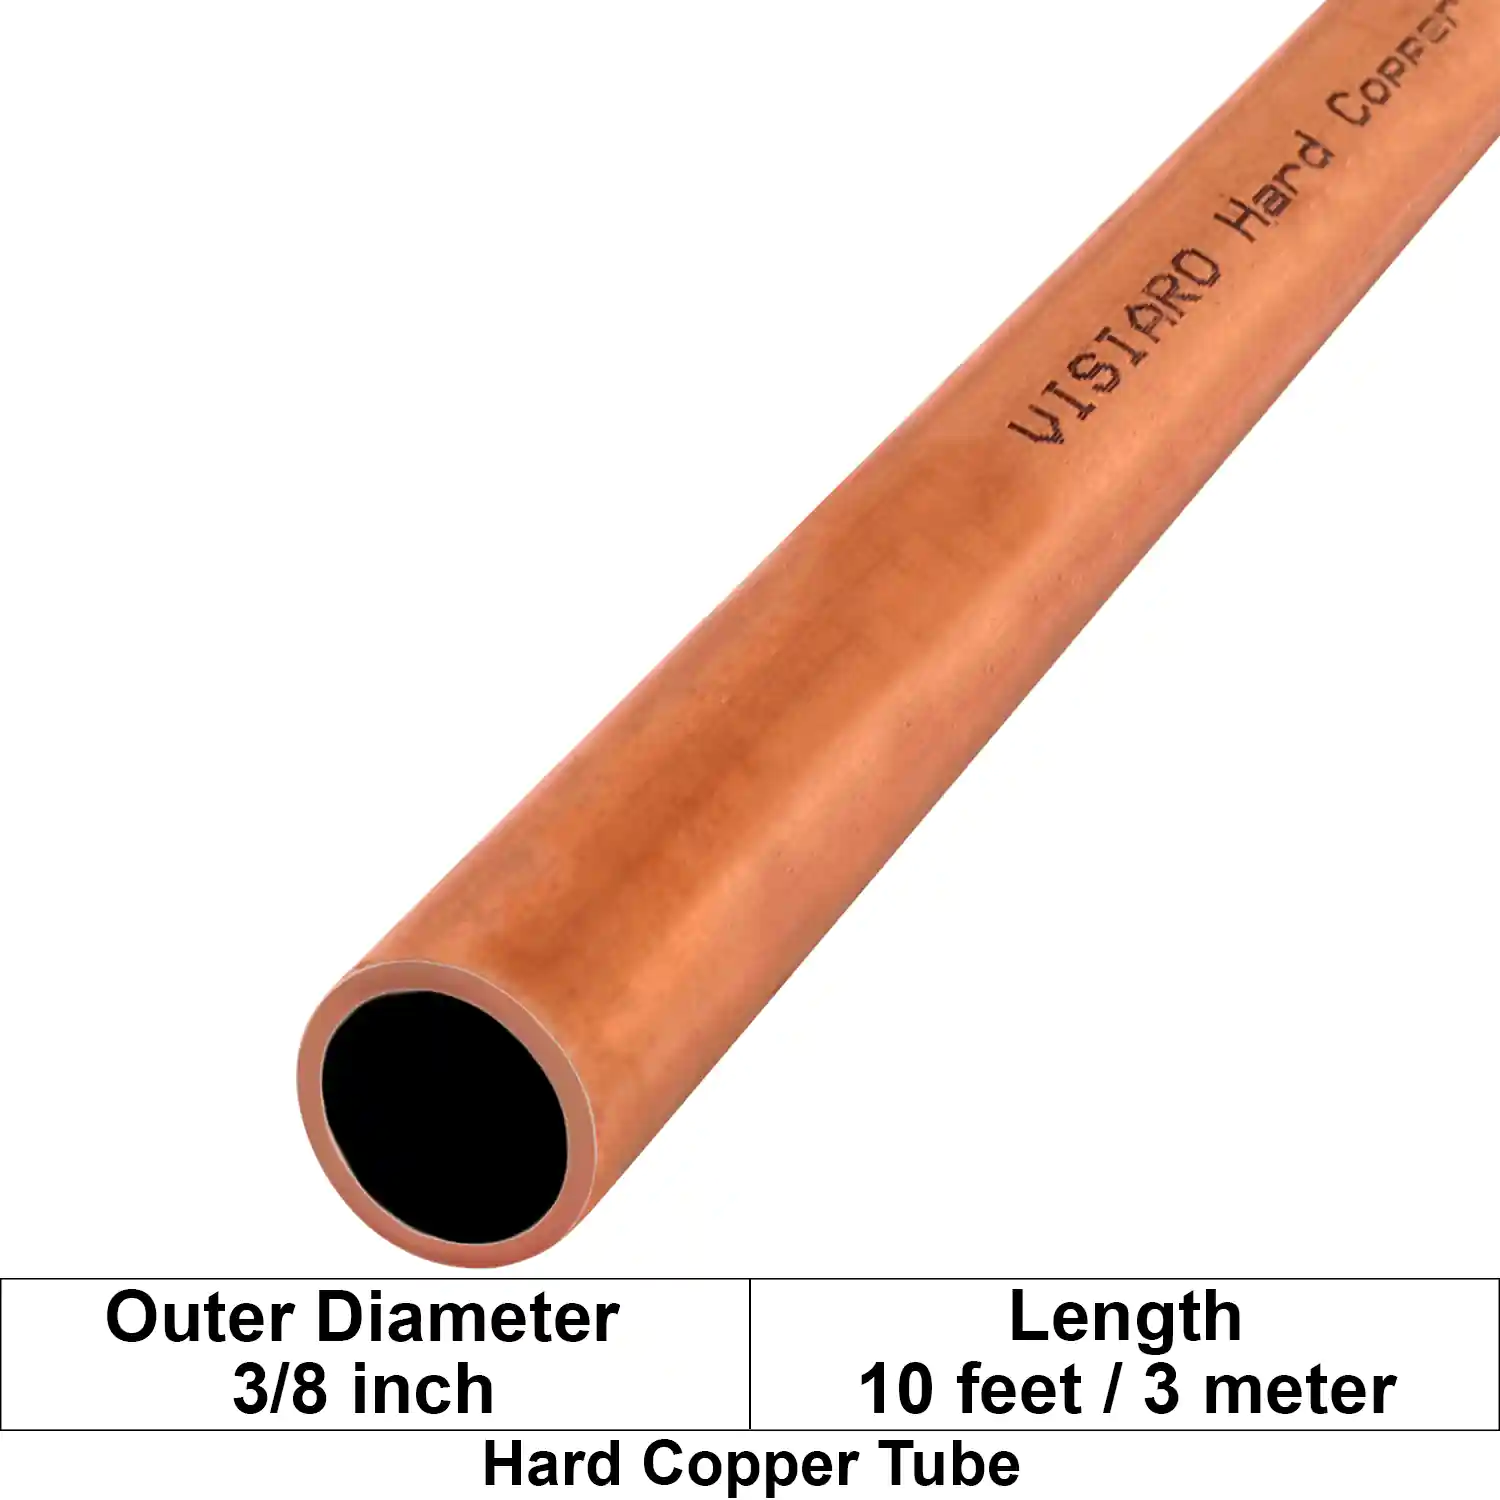 Visiaro Hard Copper Tube 10ft long Outer Diameter - 3/8 inch